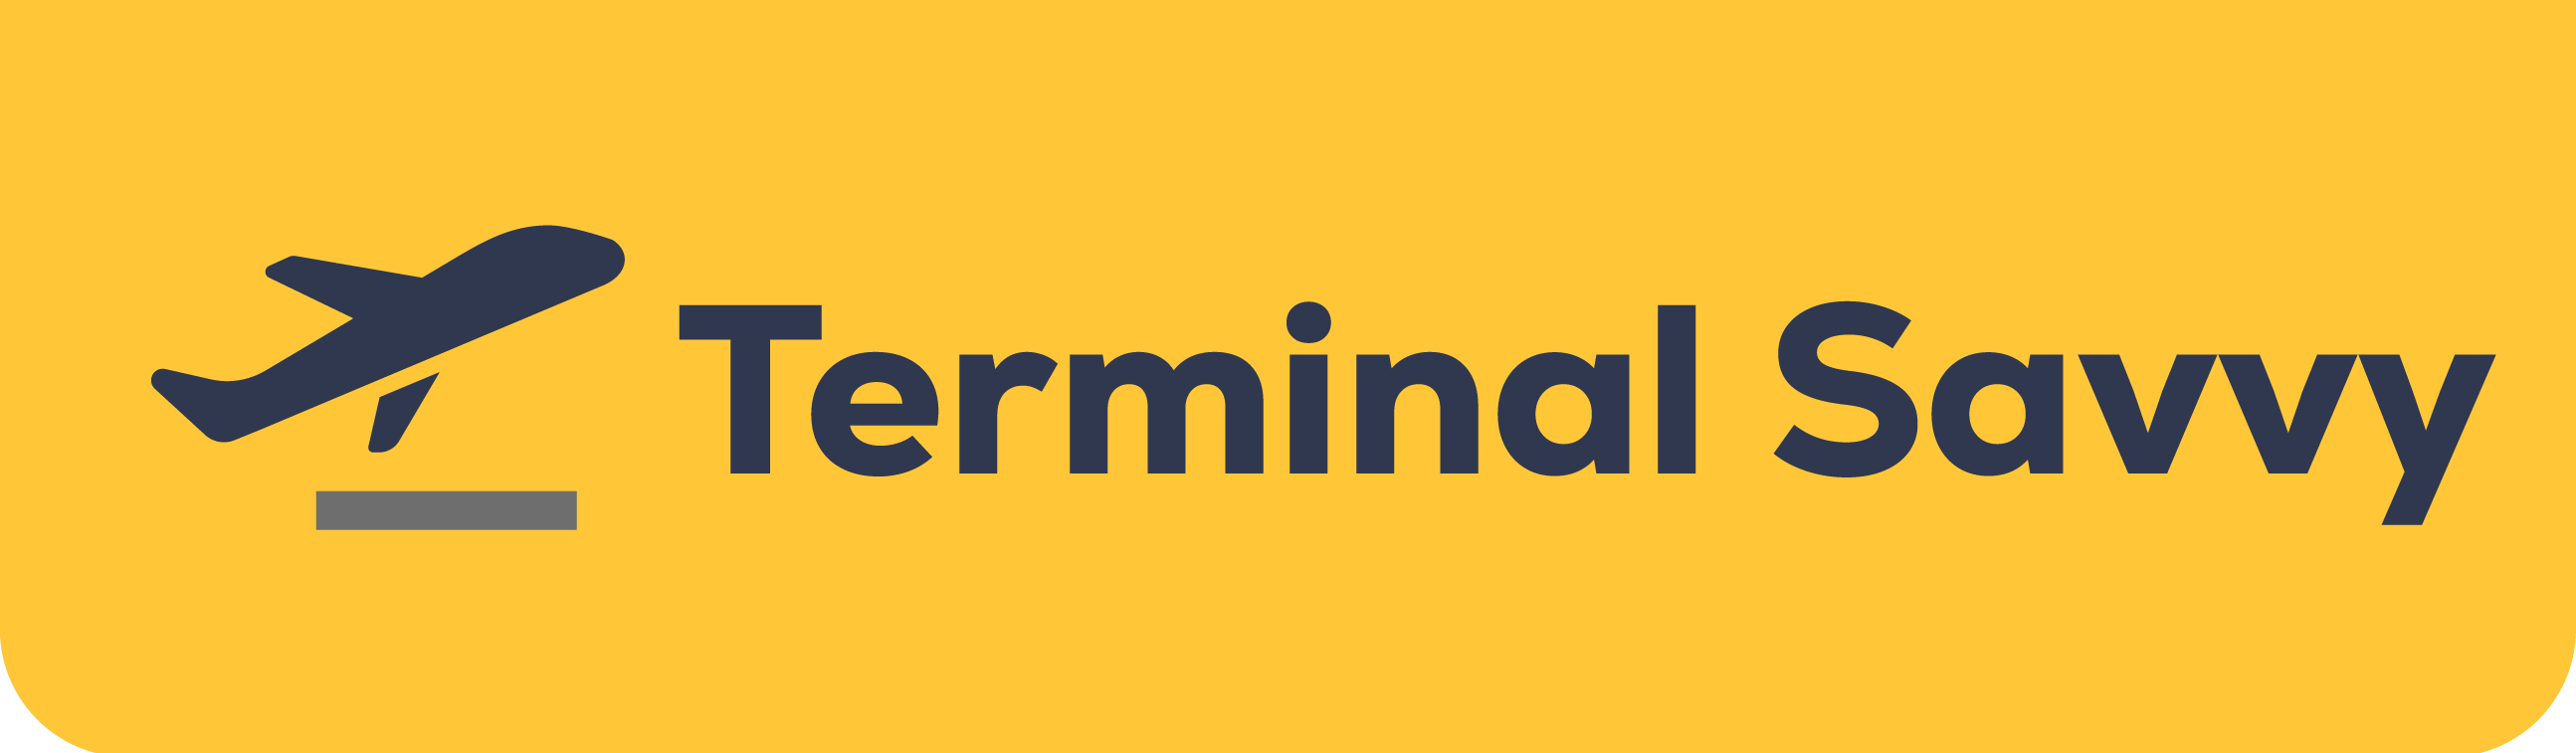 terminal savvy logo